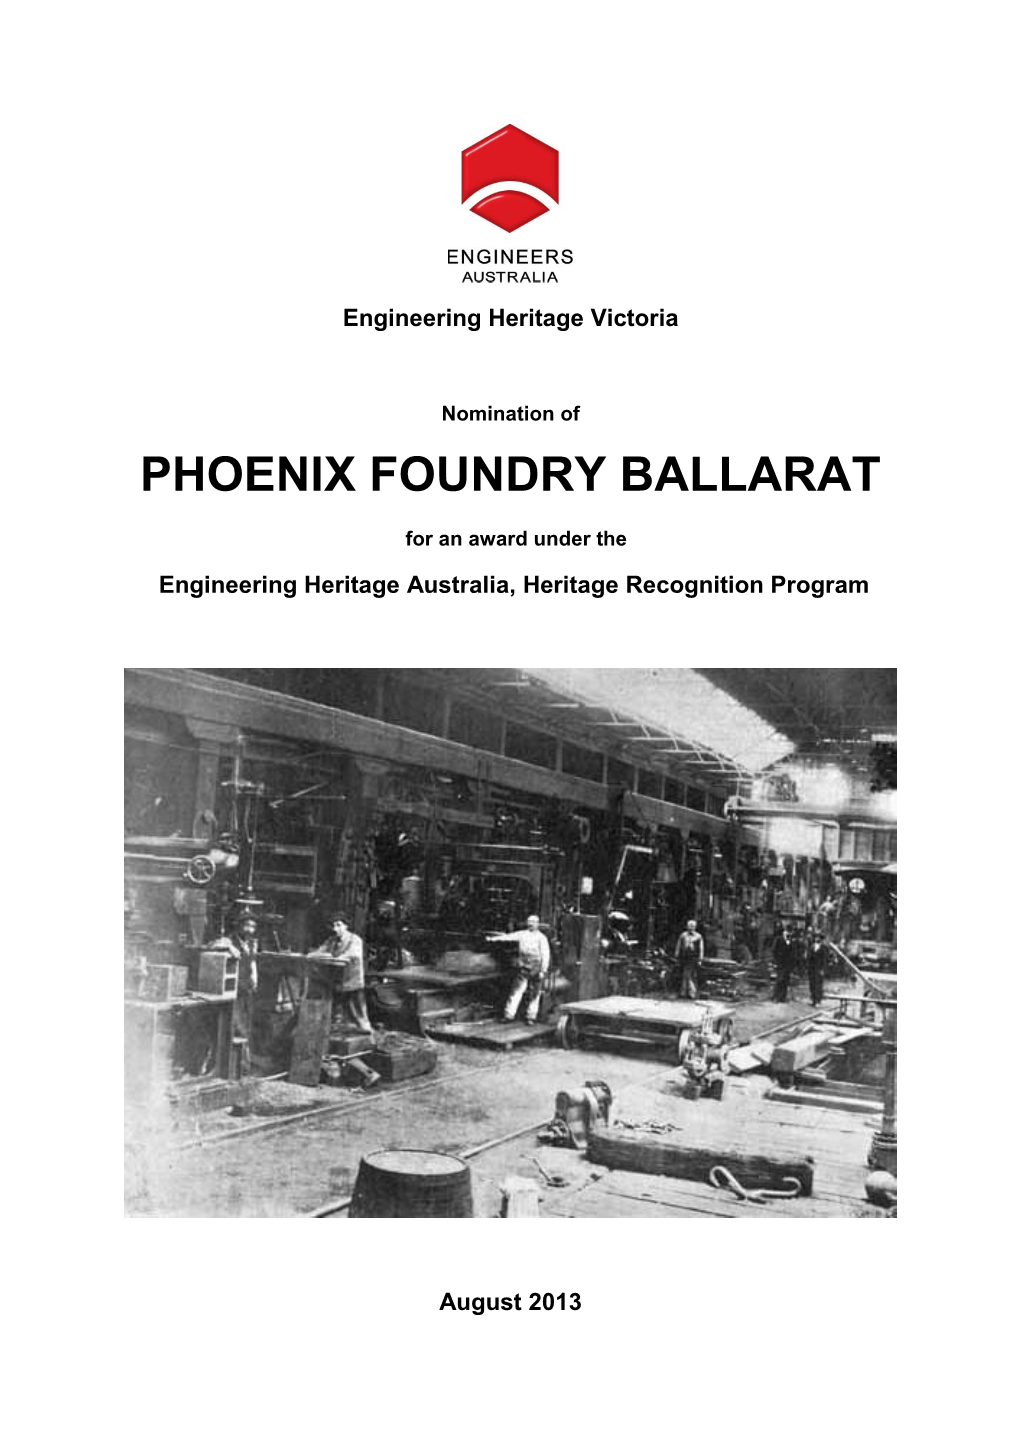 Phoenix Foundry Ballarat